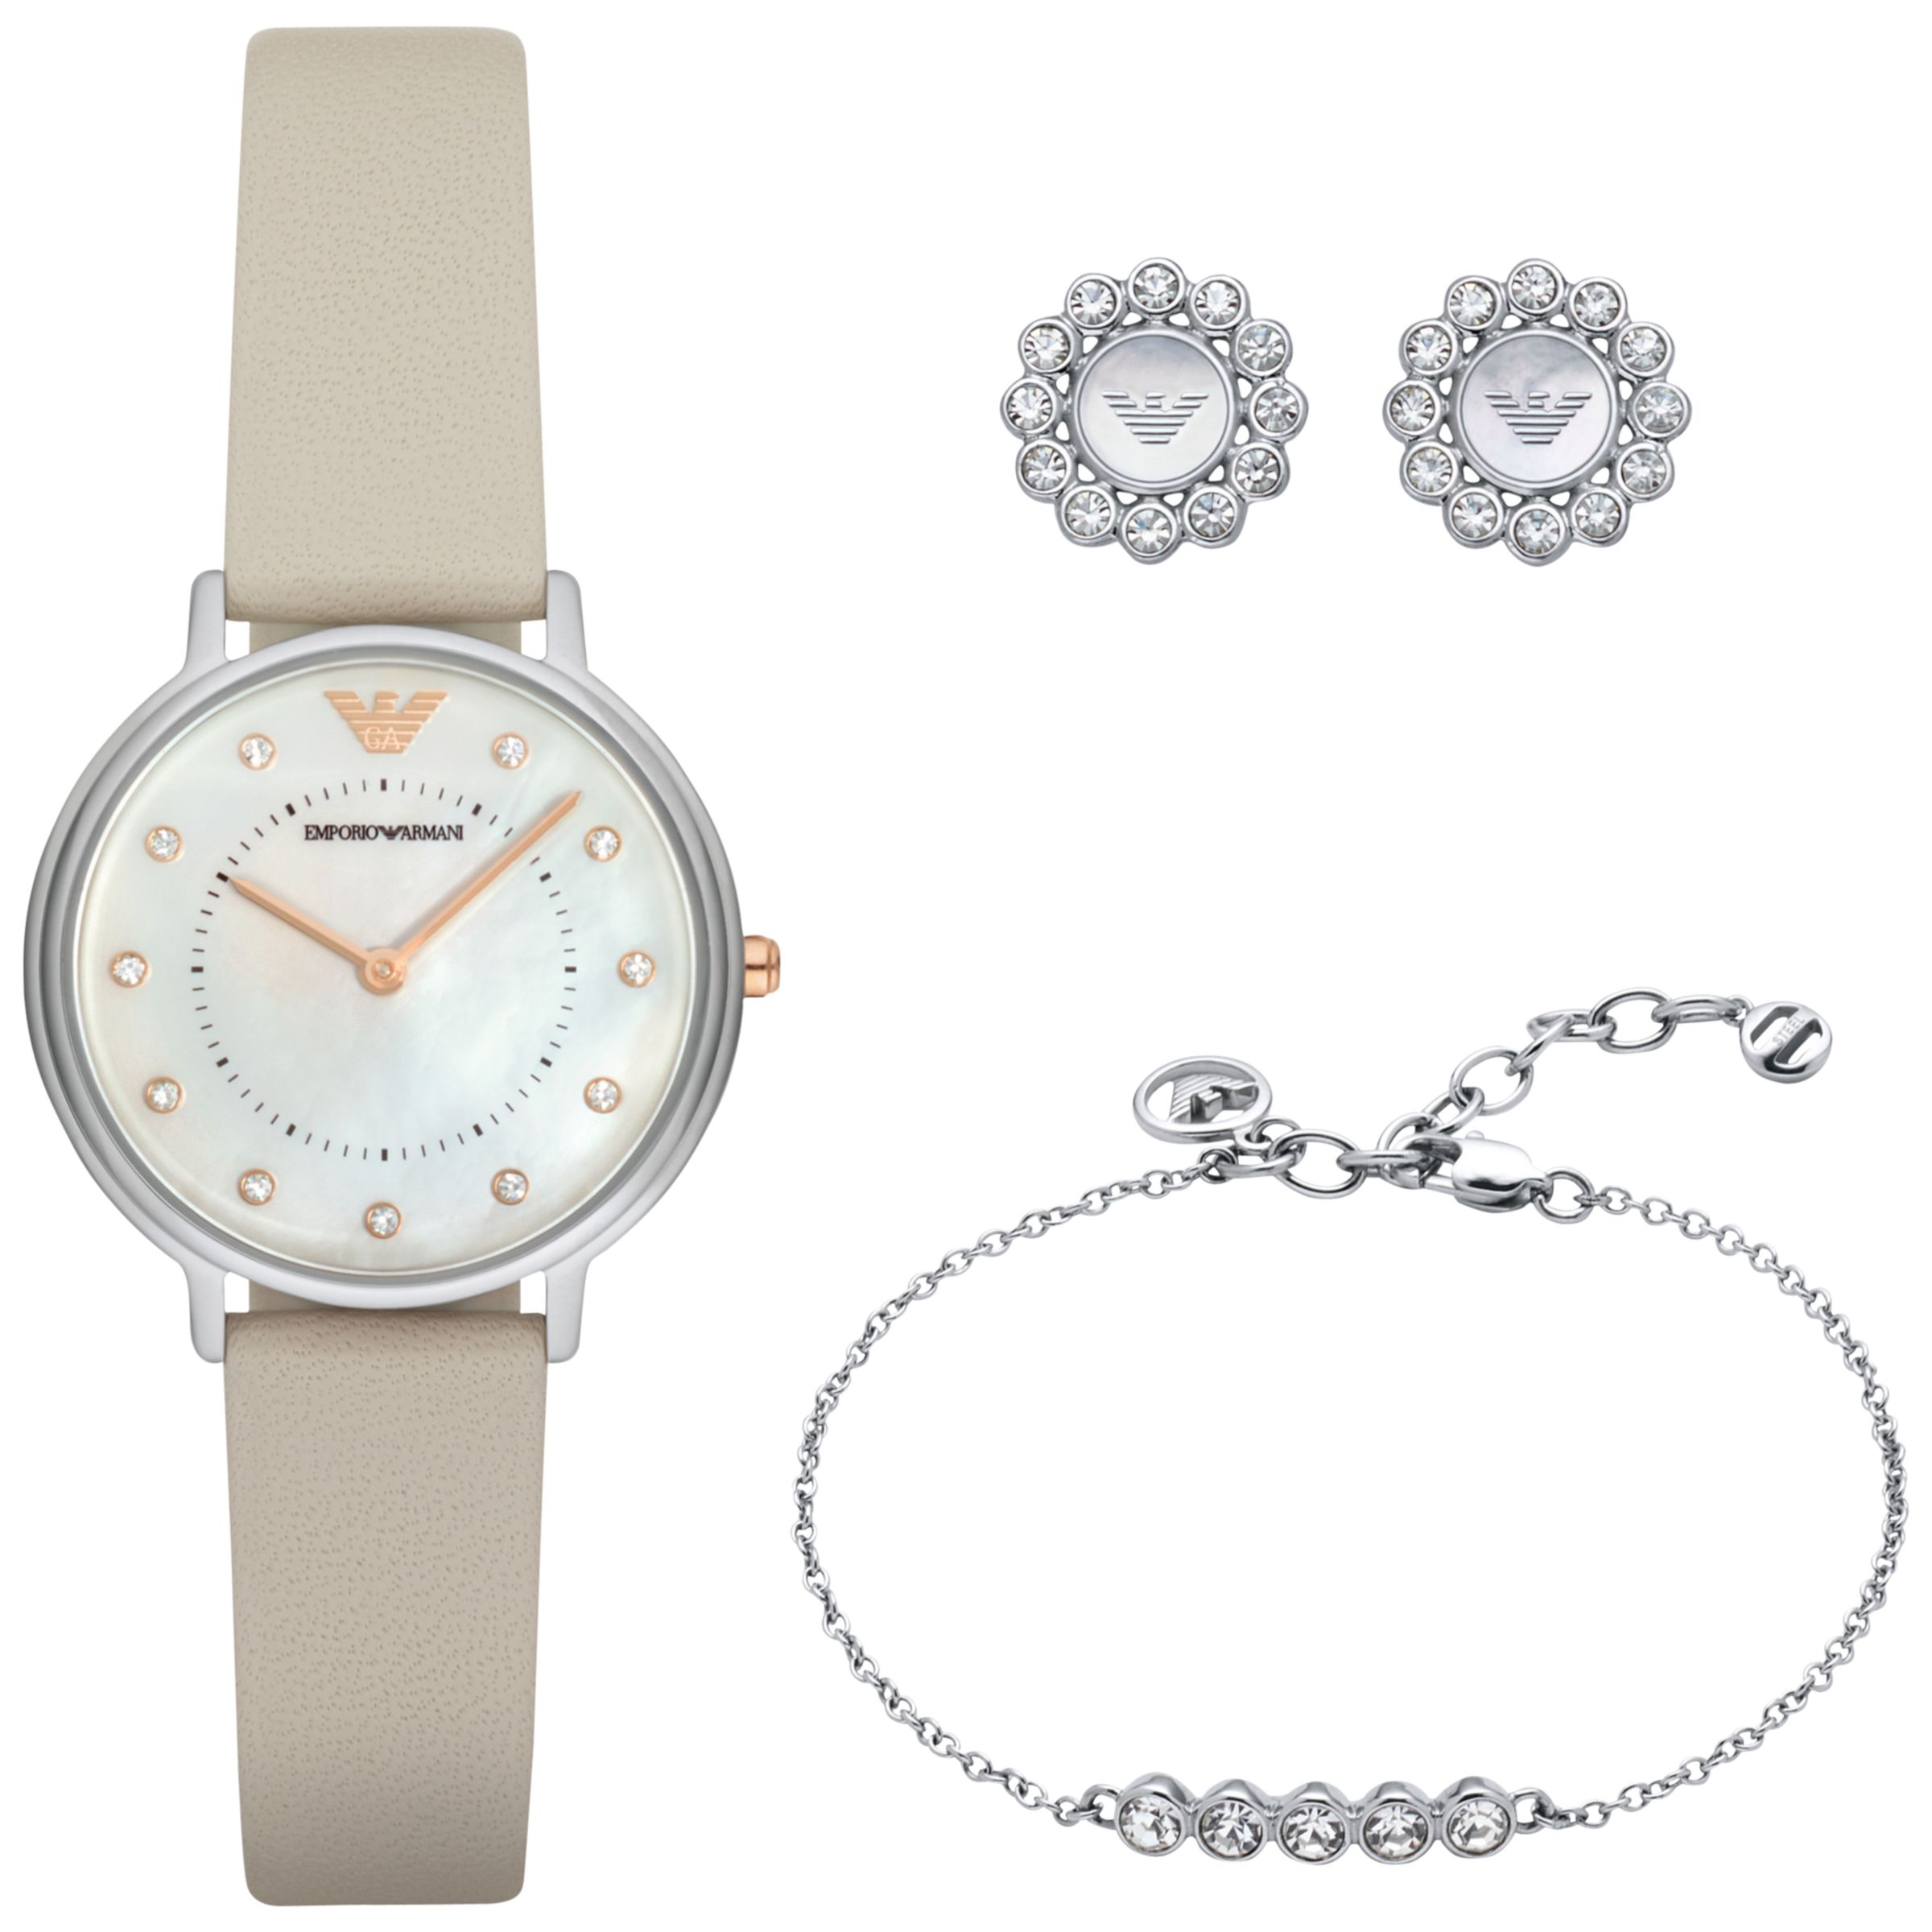 armani watch and bracelet set